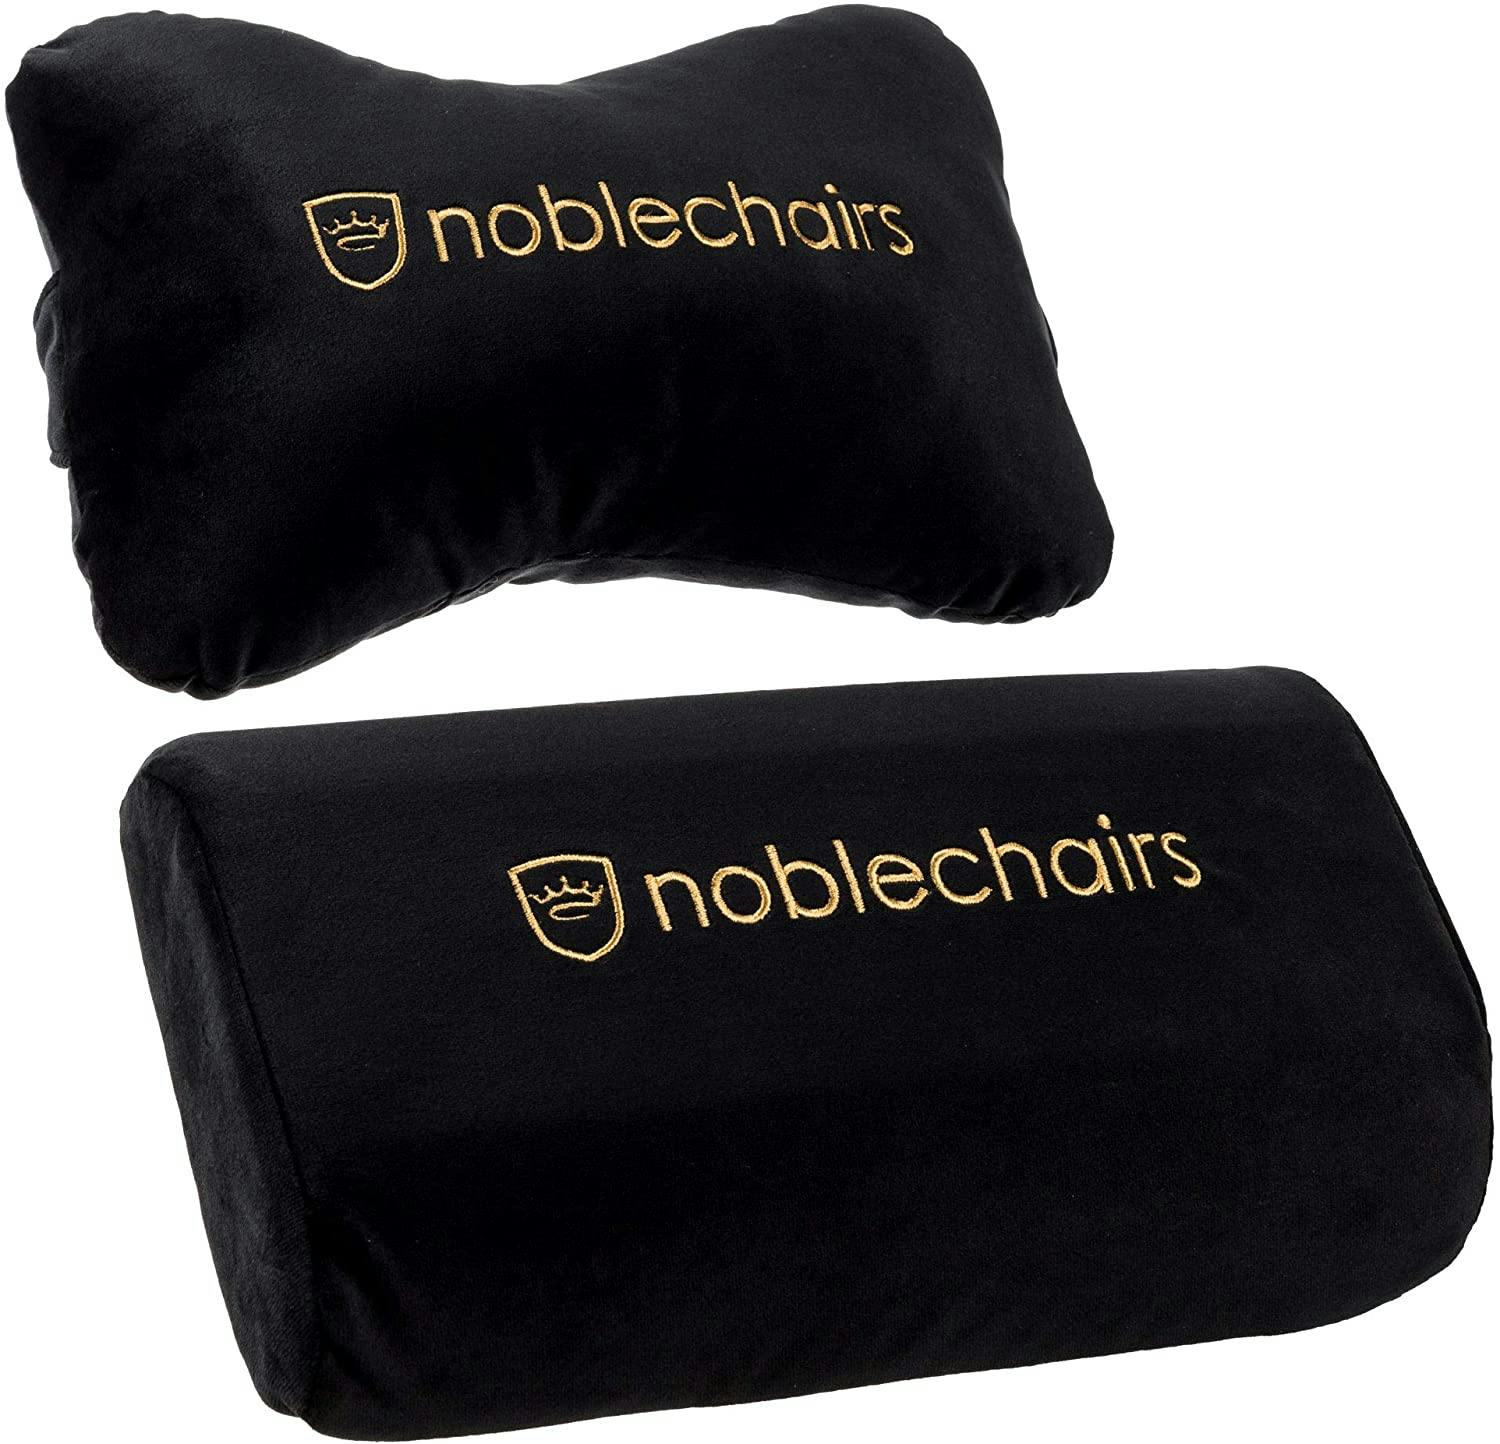 Noblechairs - Cushion Set Black / Gold